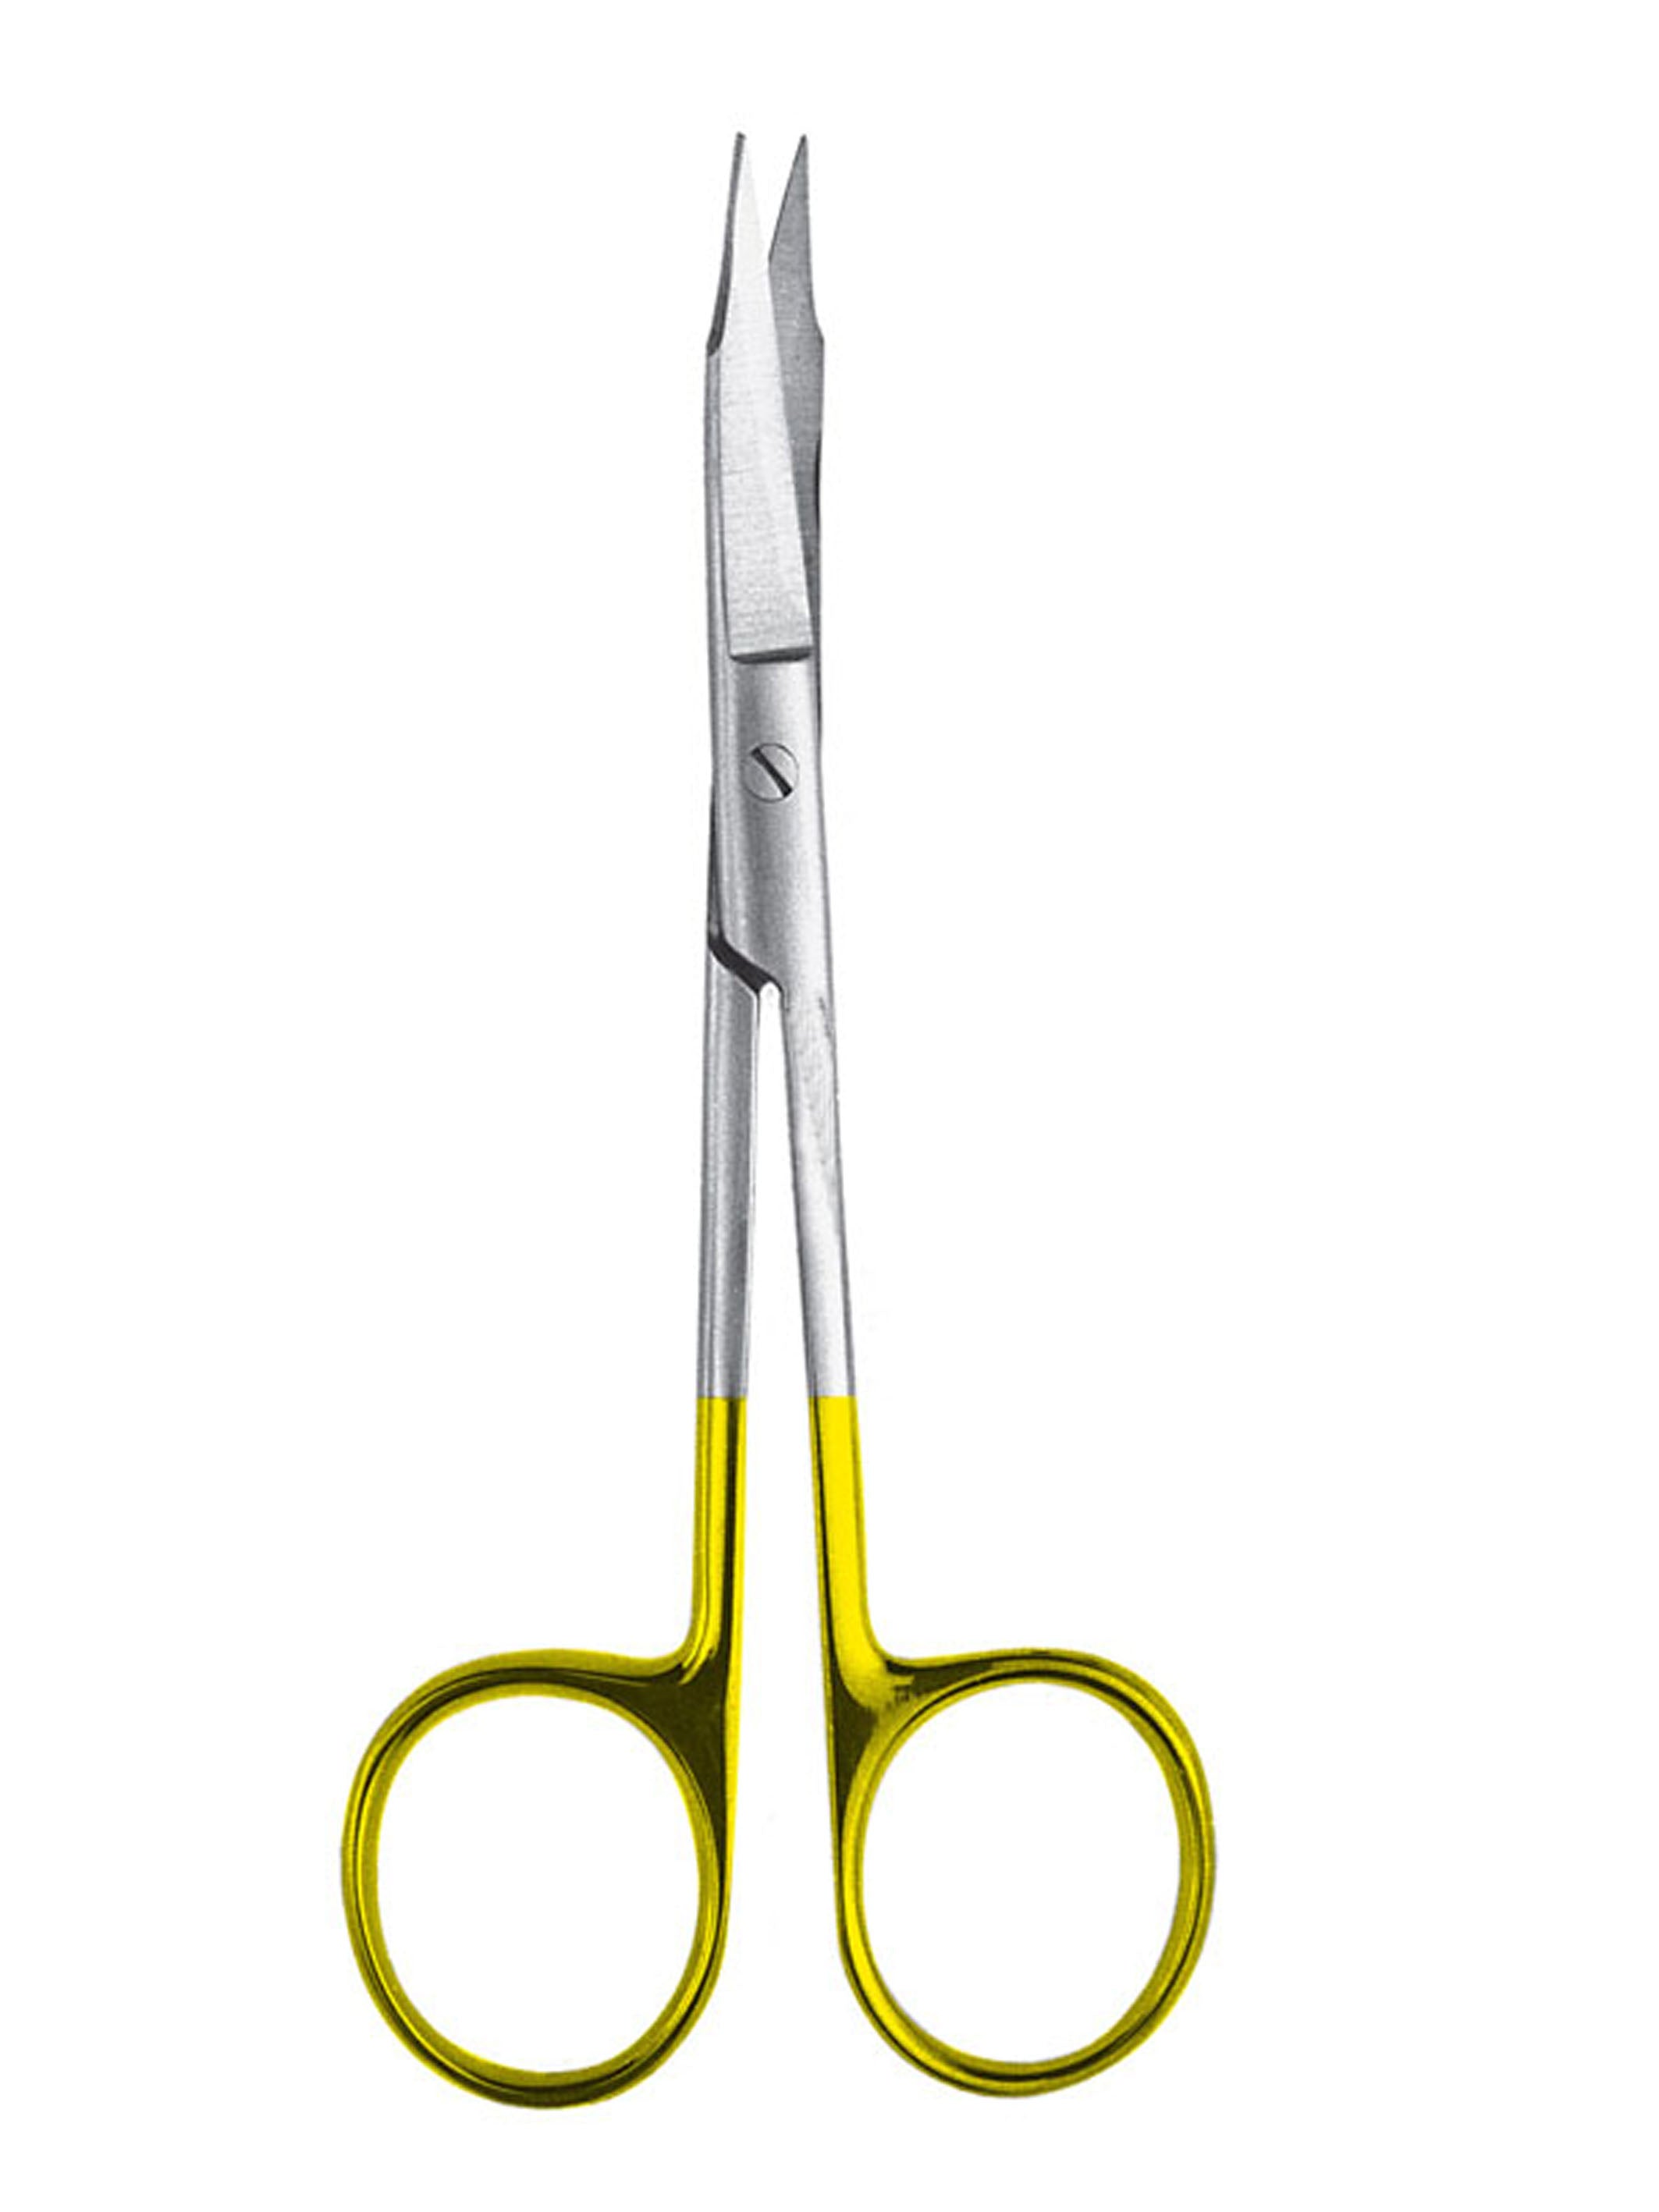 Gator-Edge Scissors with Carbide Inserted Blades